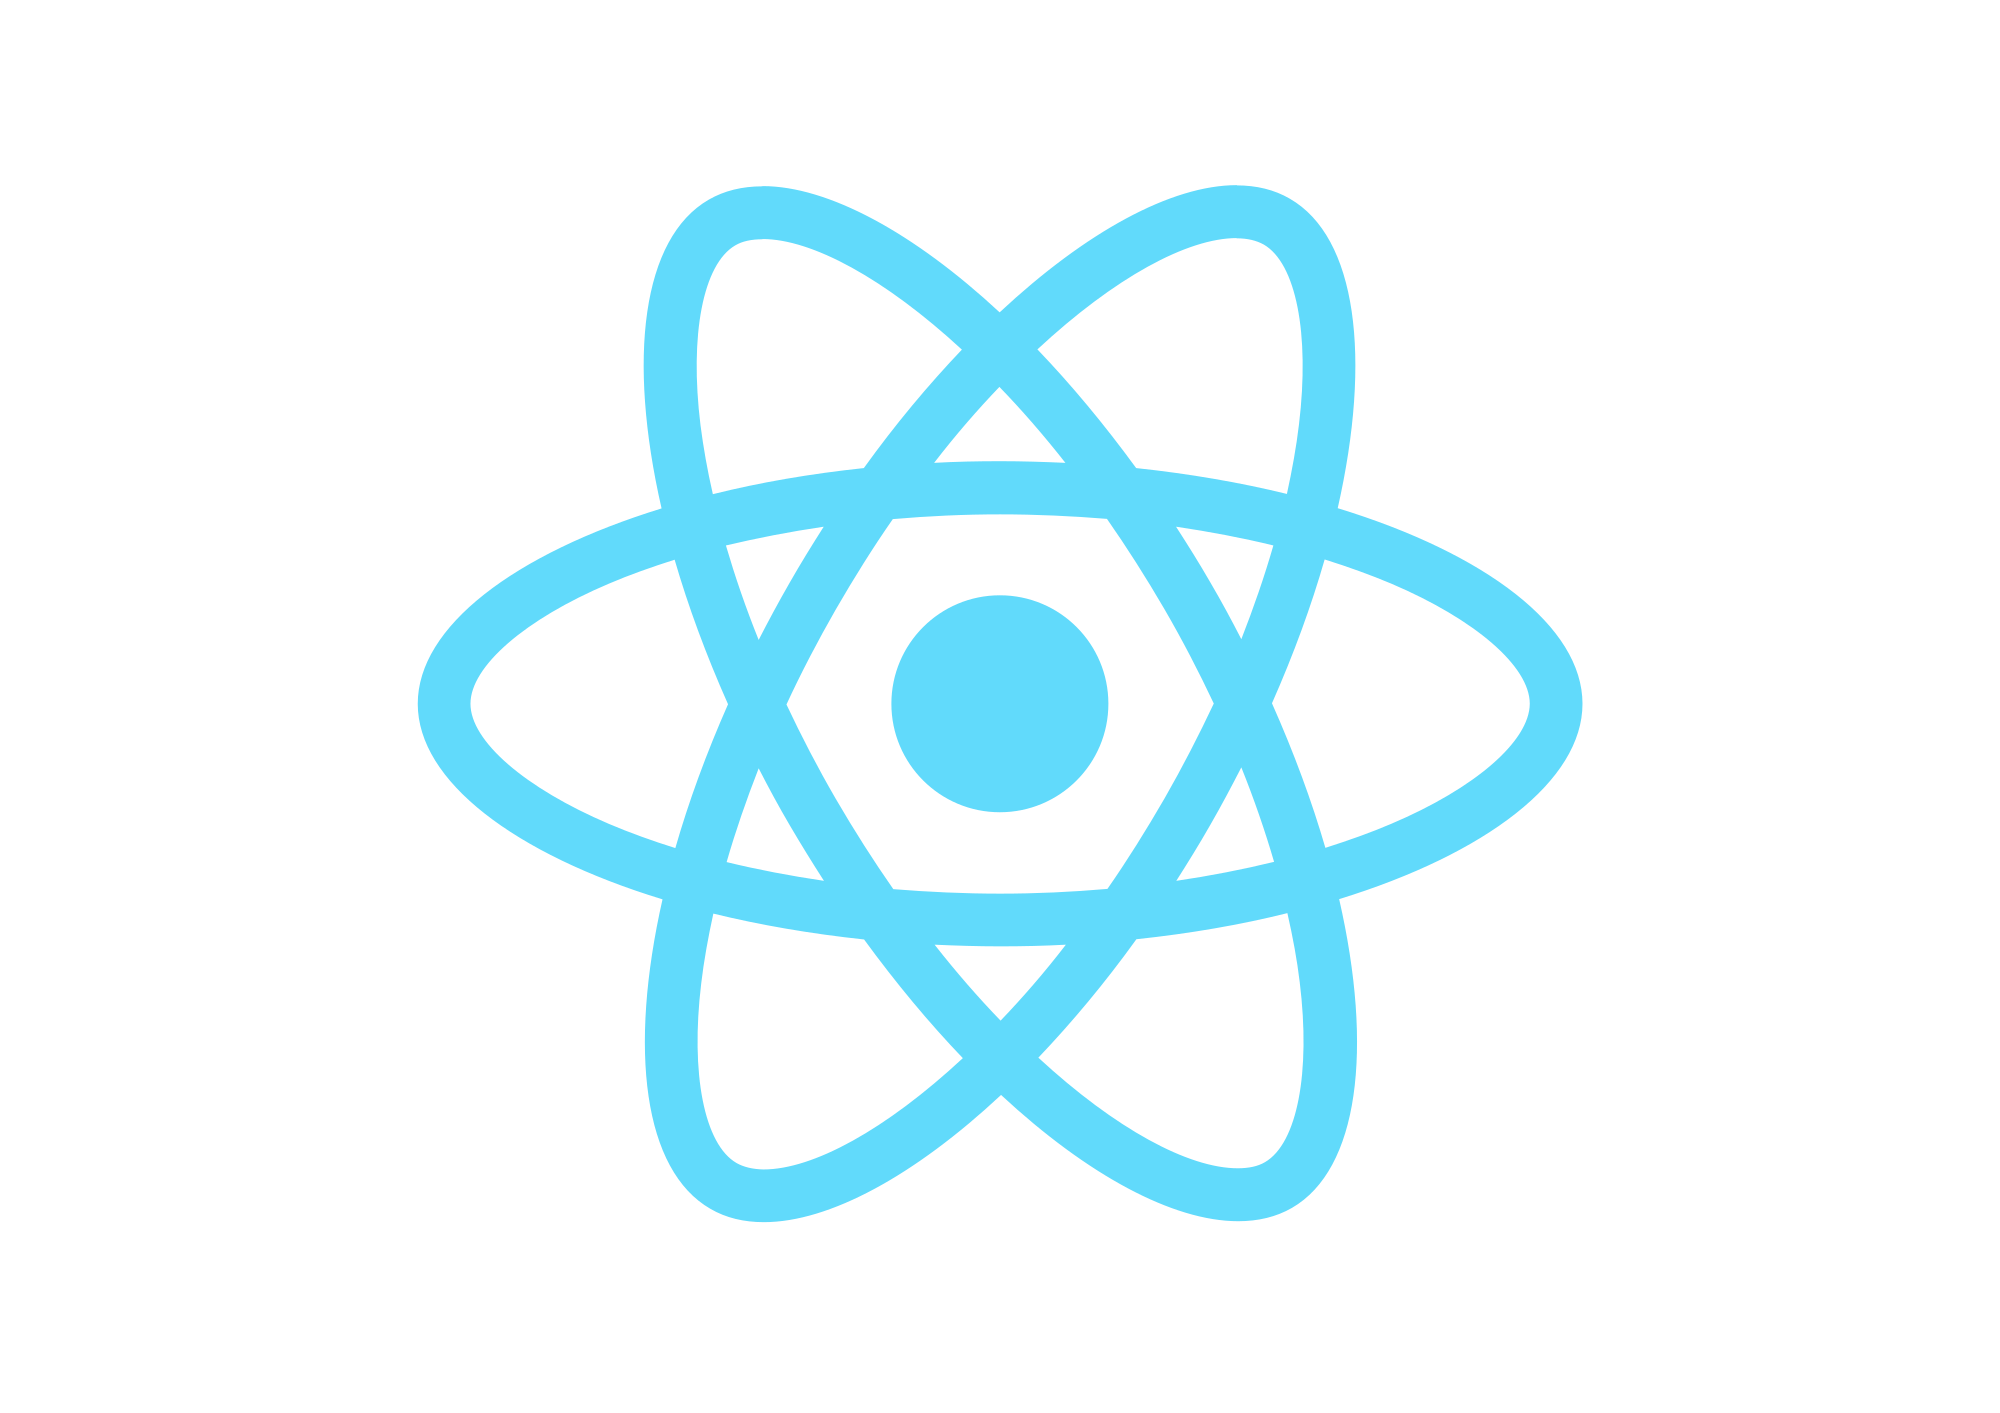 React blue atom logo on agilitycms.com